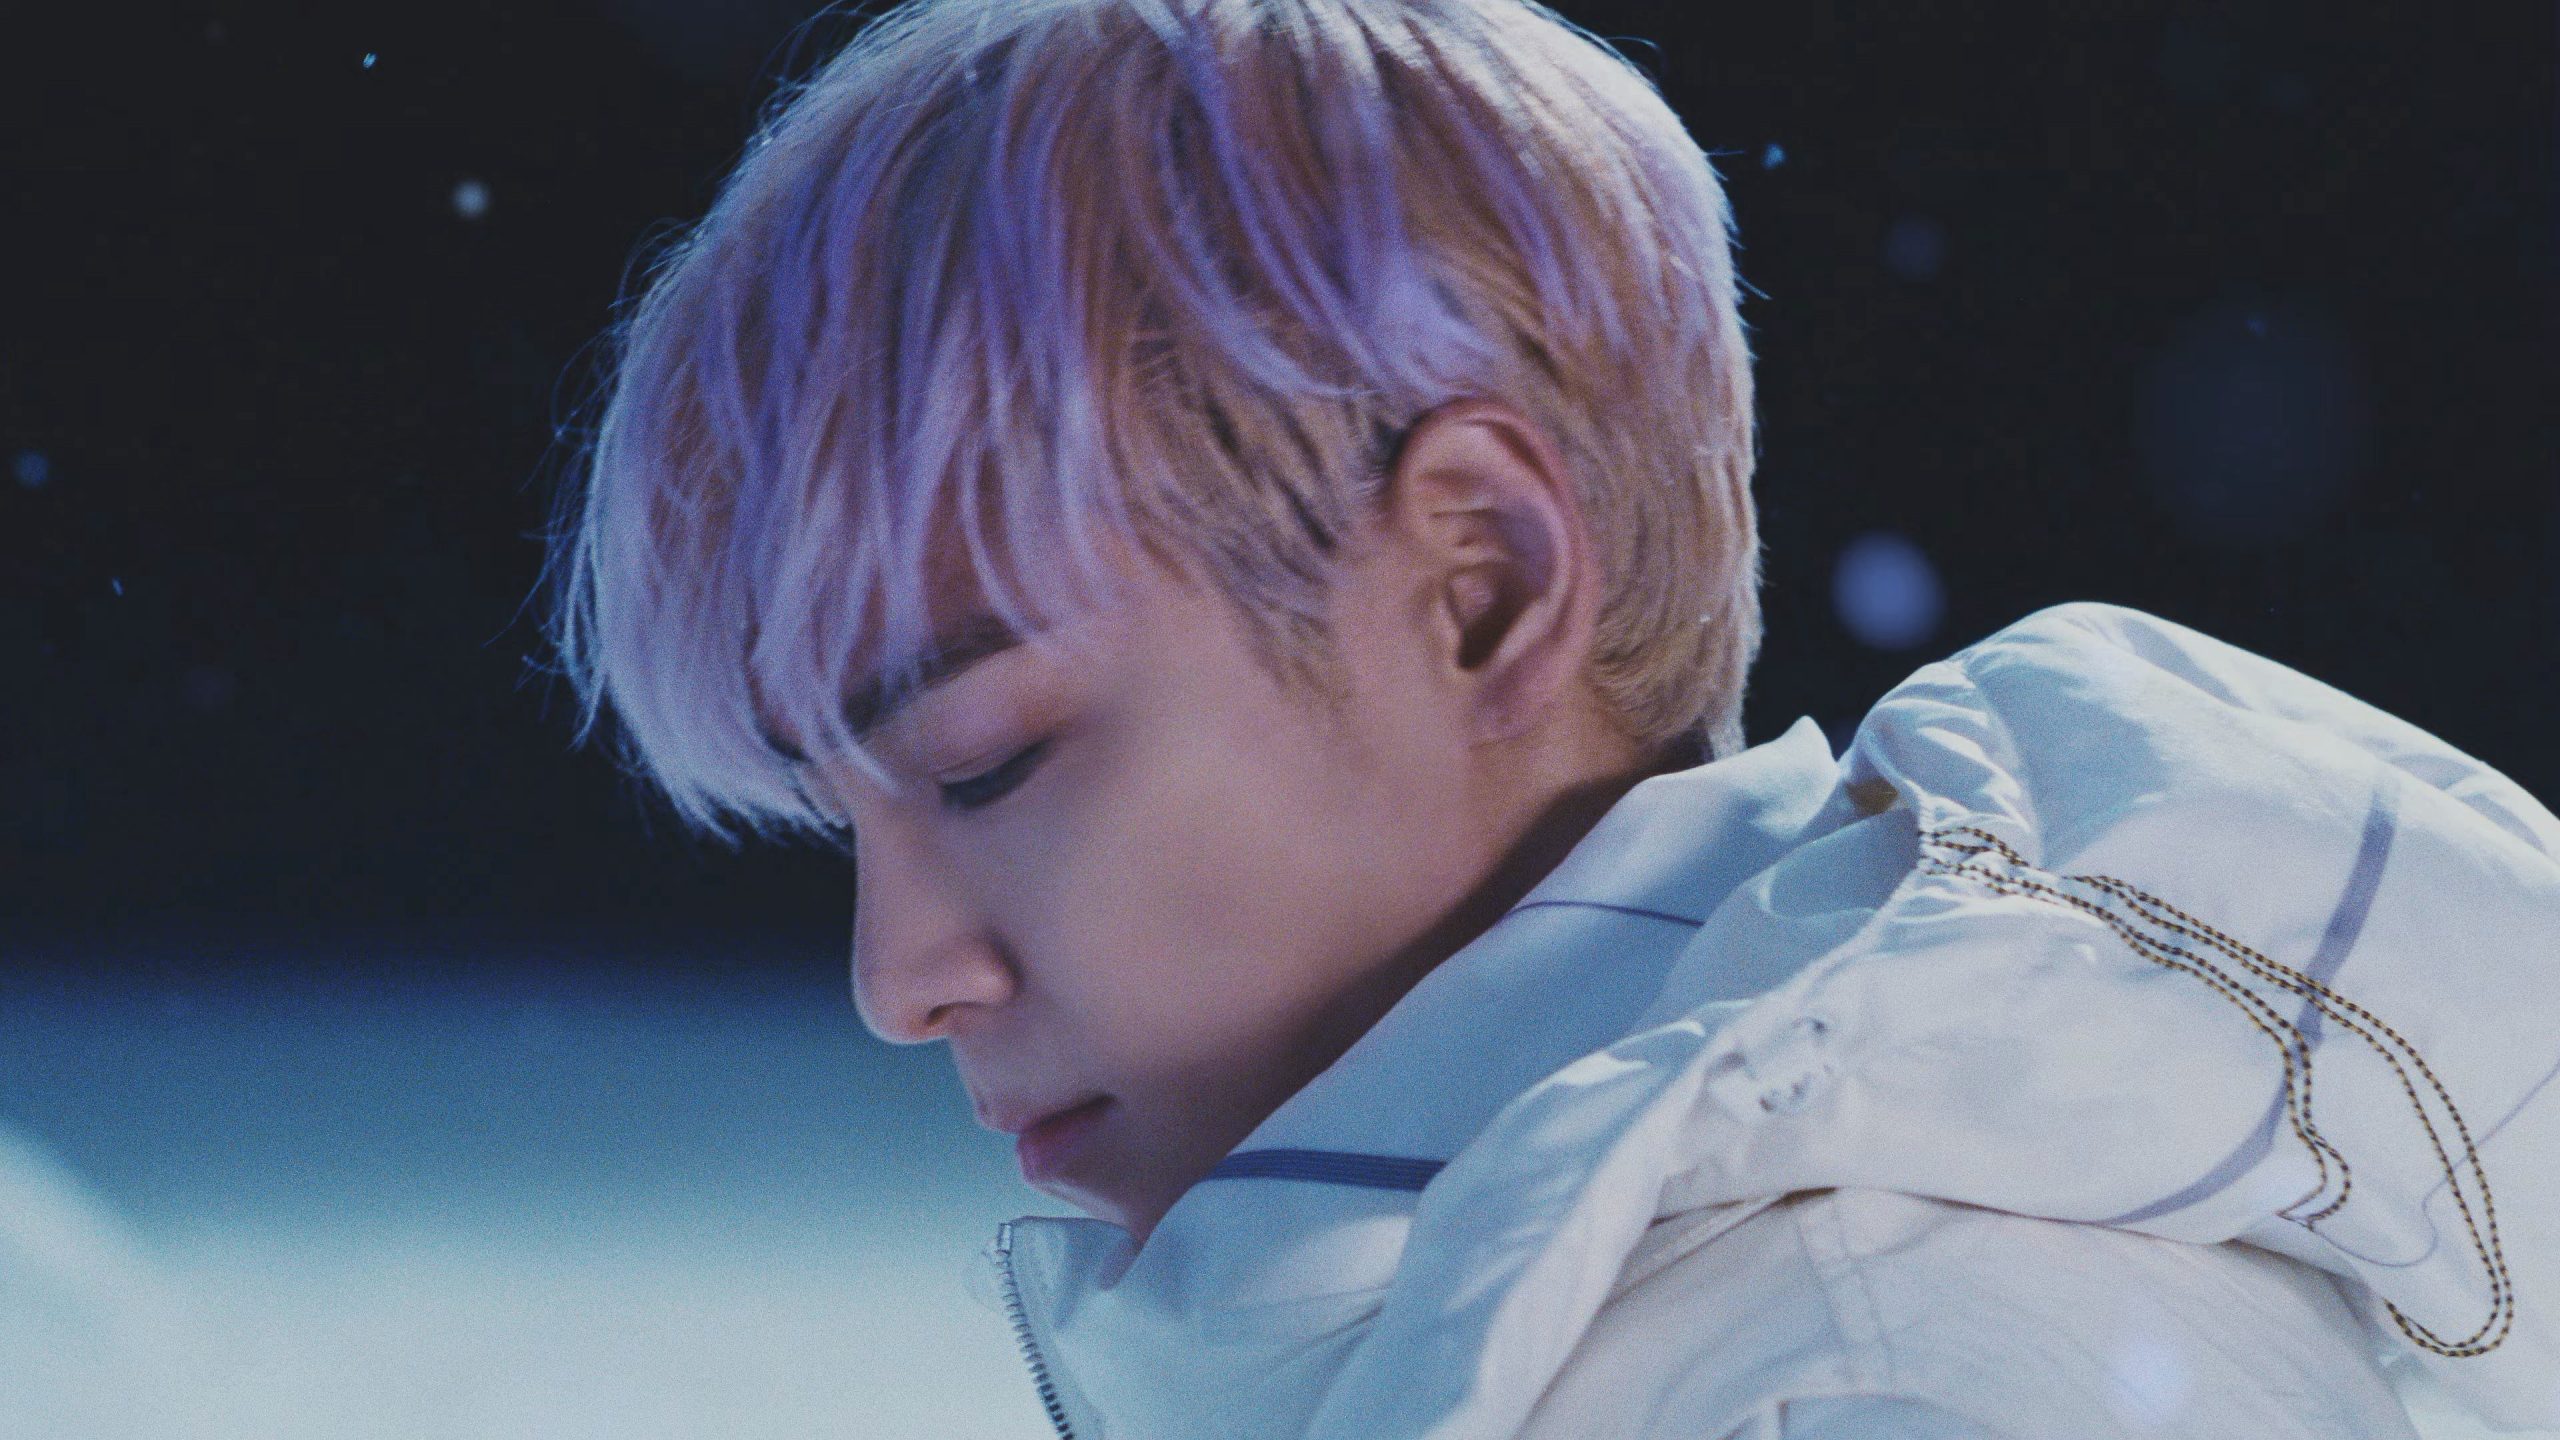 Harper's Bazaar_BIGBANG MV Still Life nhà YG_09